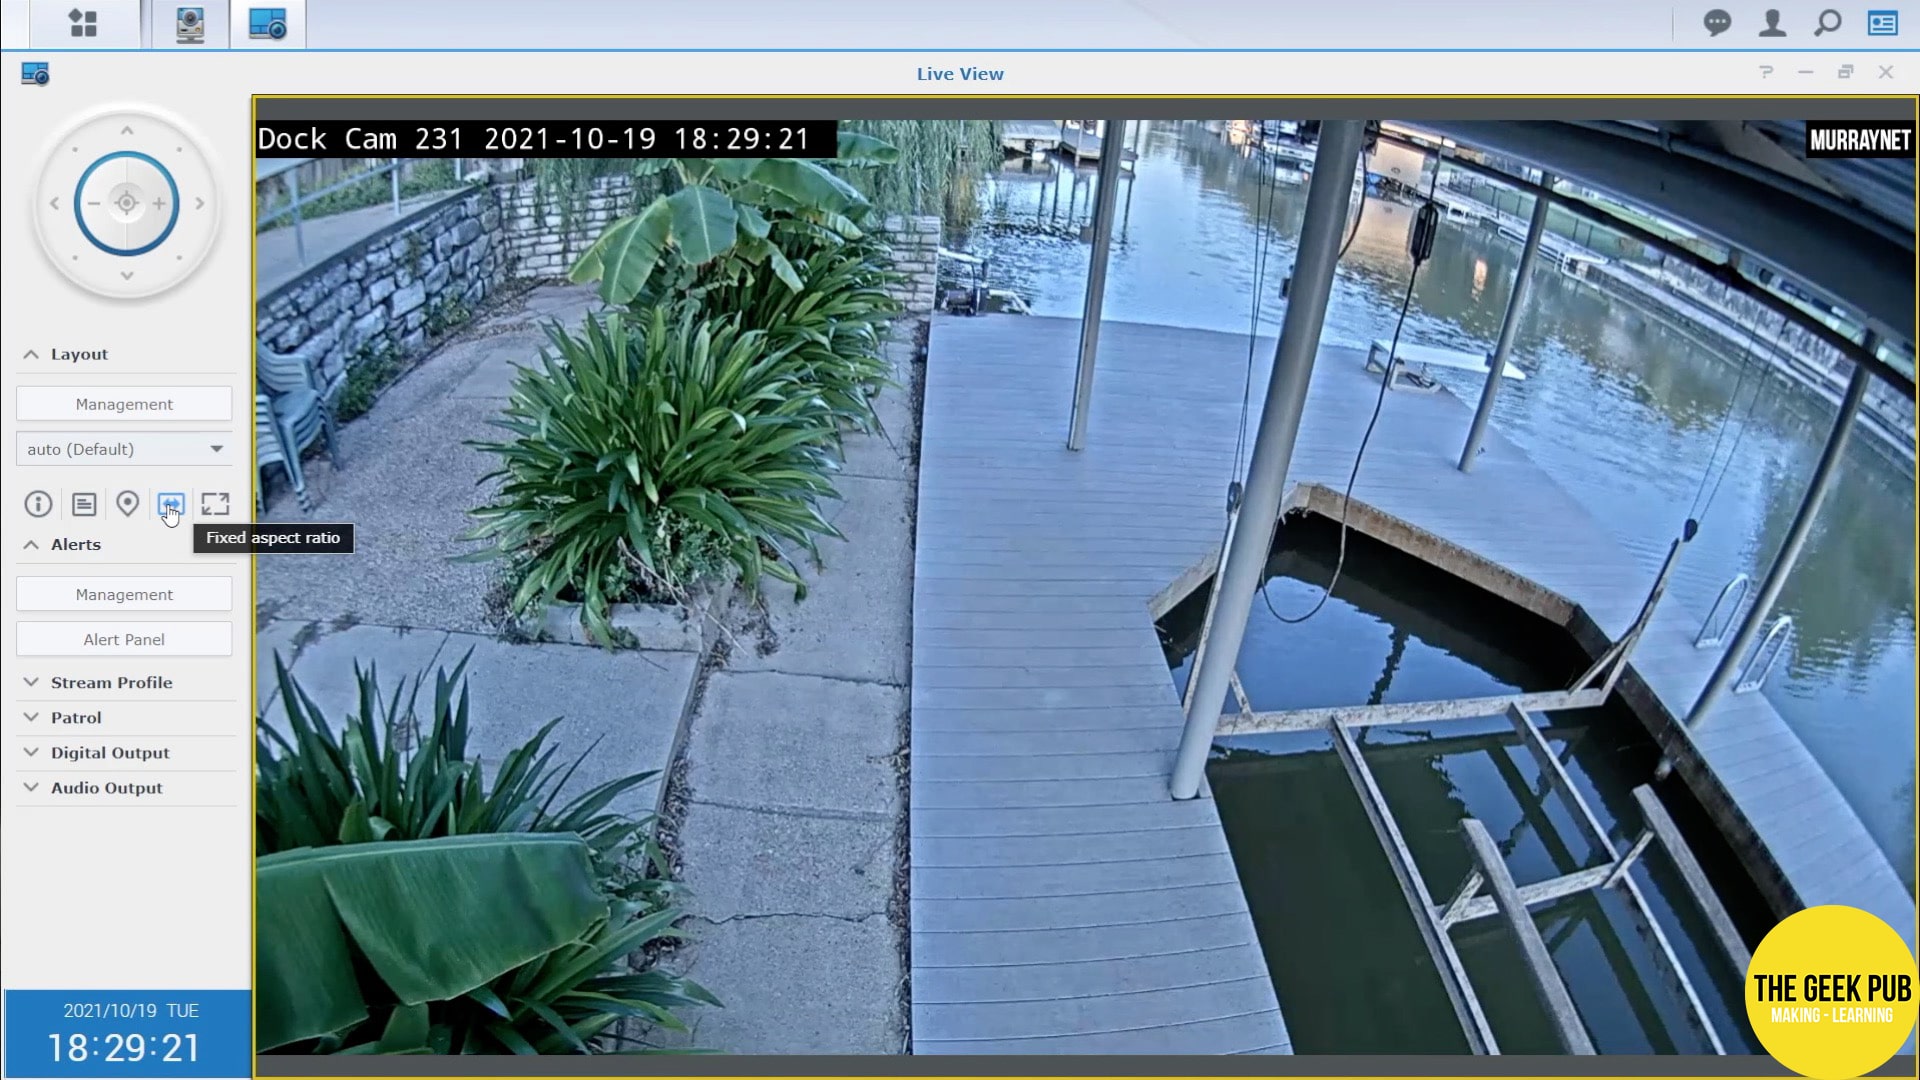 Boat Dock Security Camera